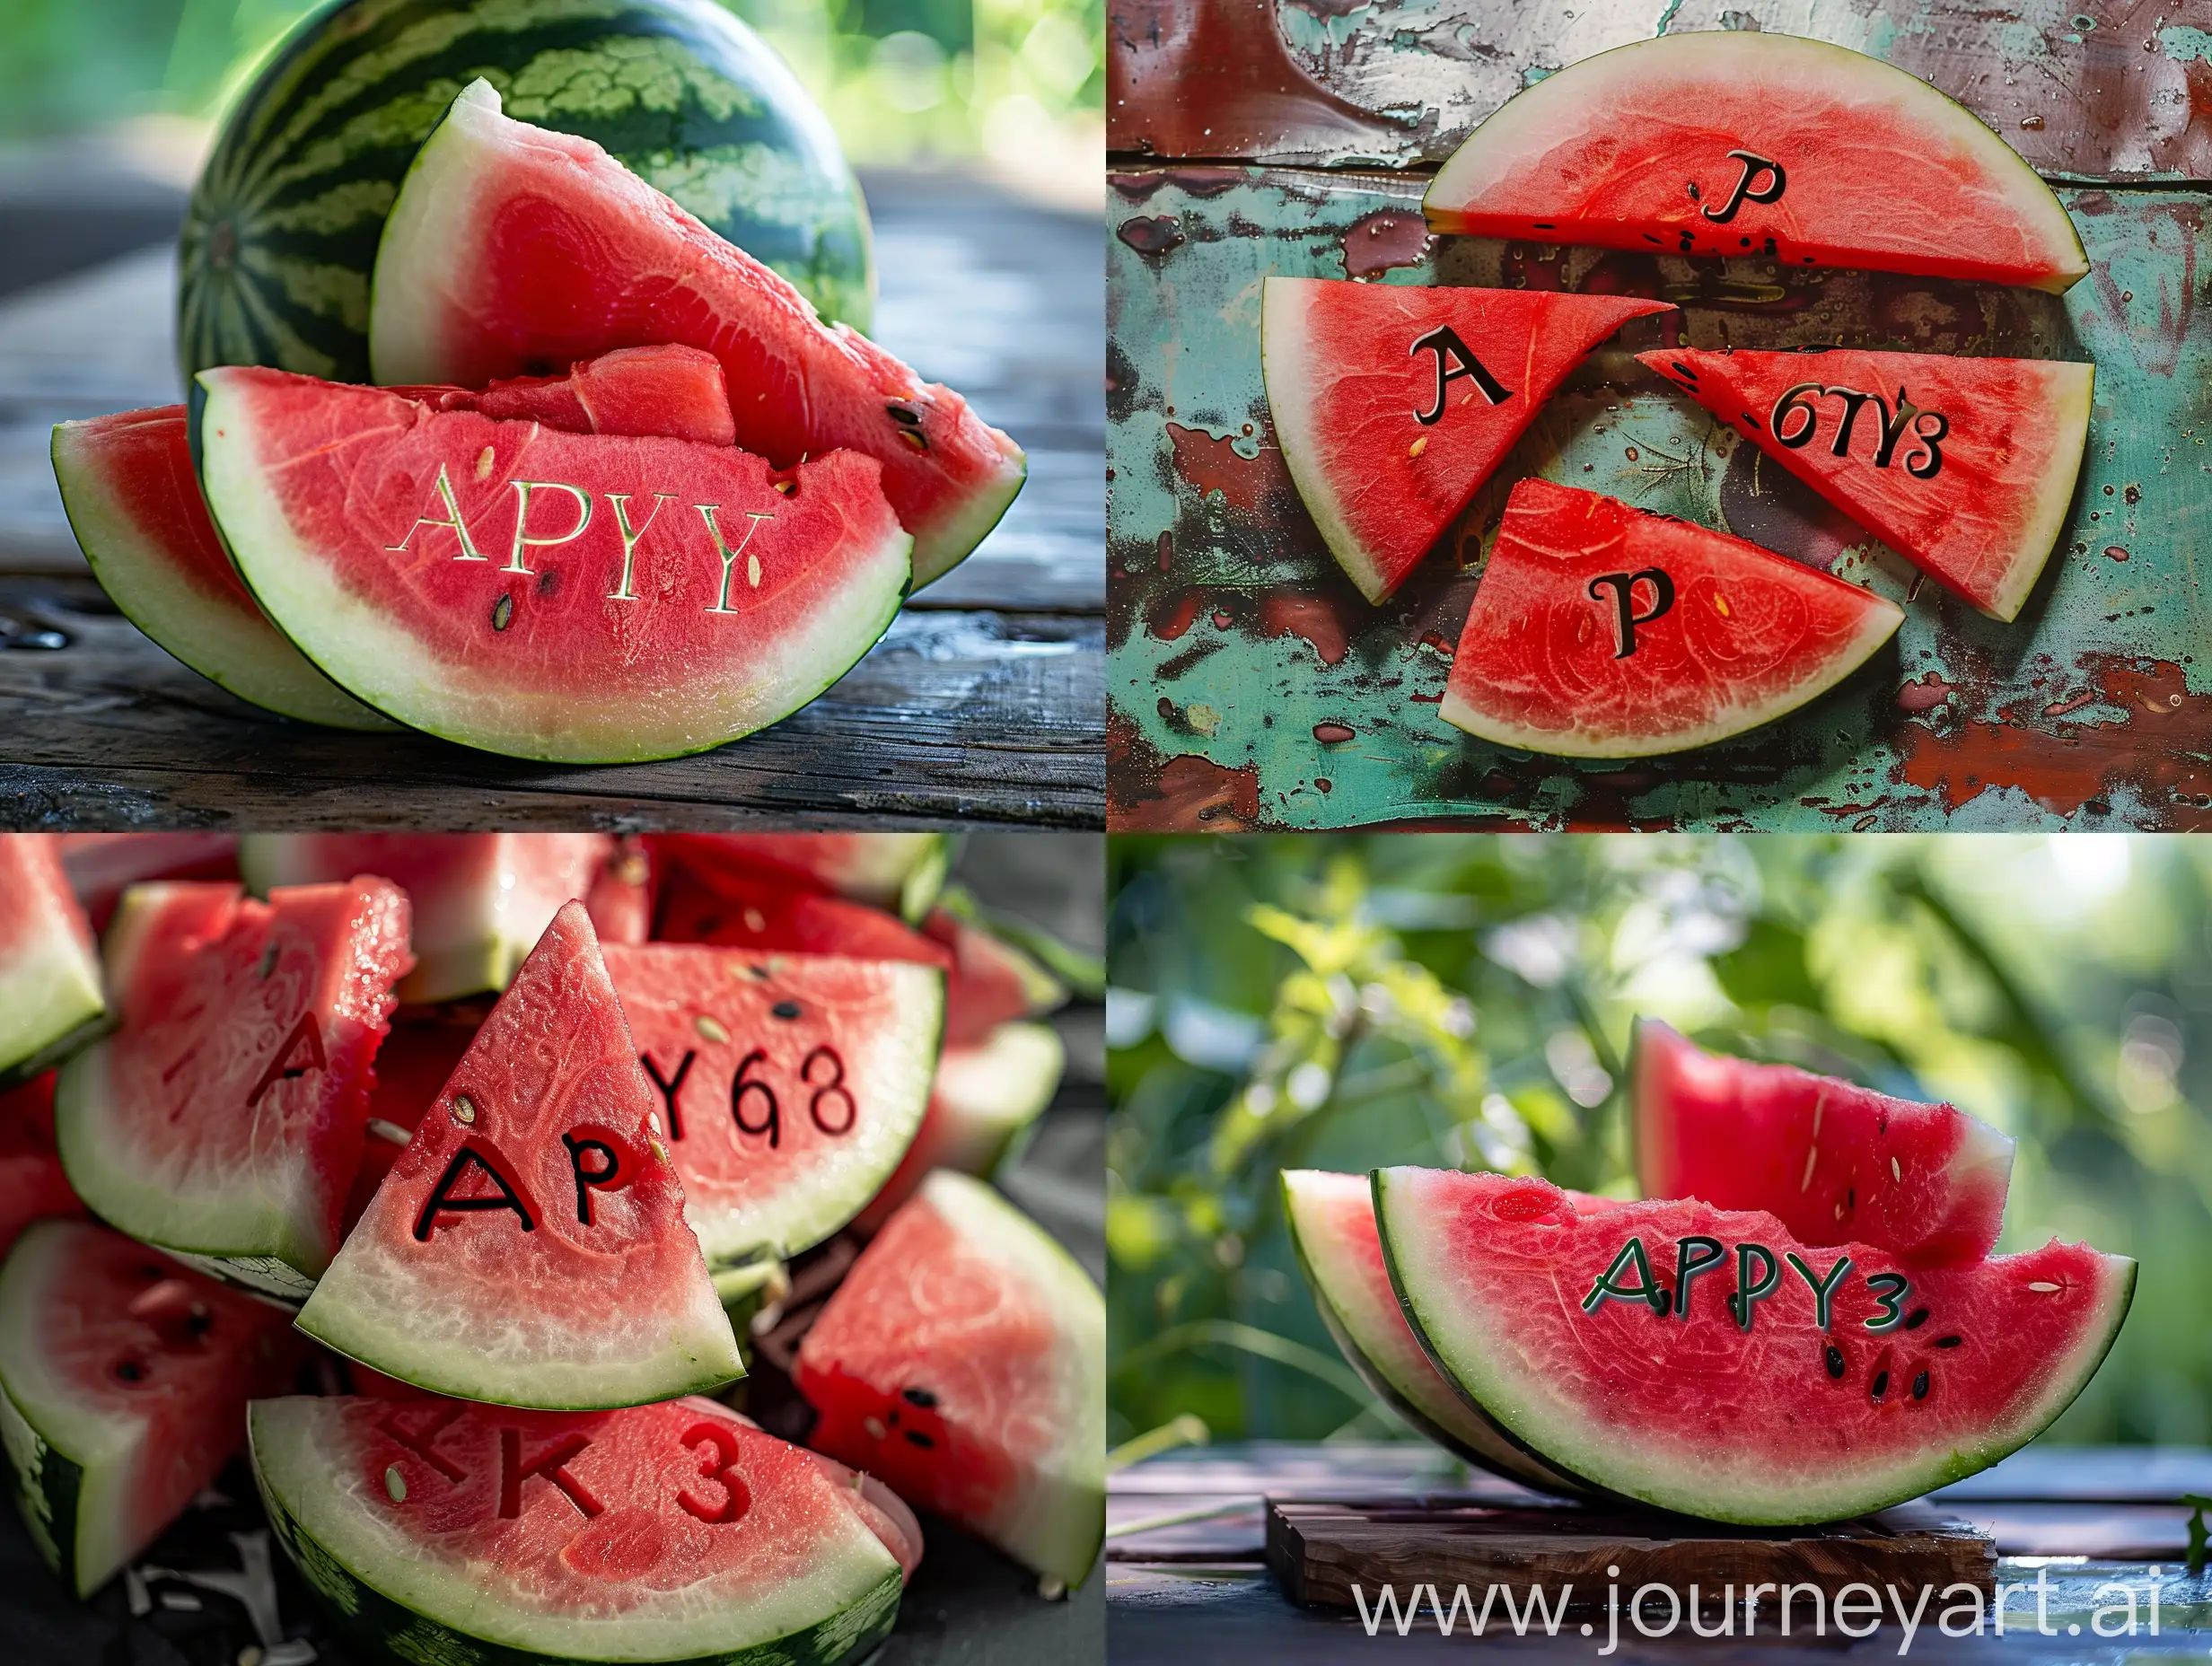 On red watermelon flesh Inscription "AP6Y3" Beautiful Letters